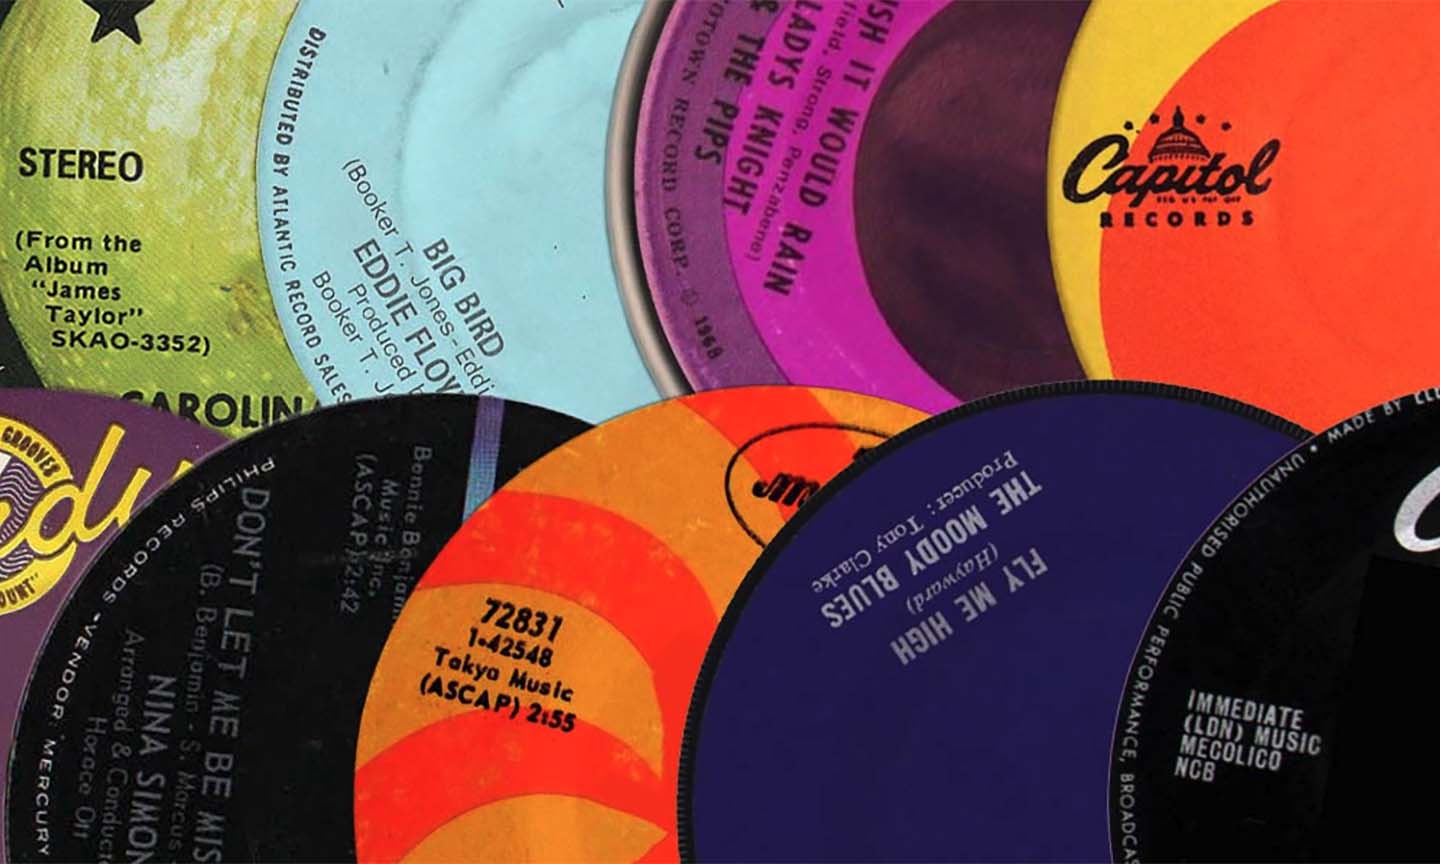 Lot 10 (45 rpm - 7") Records ~ Various Labels & Artists